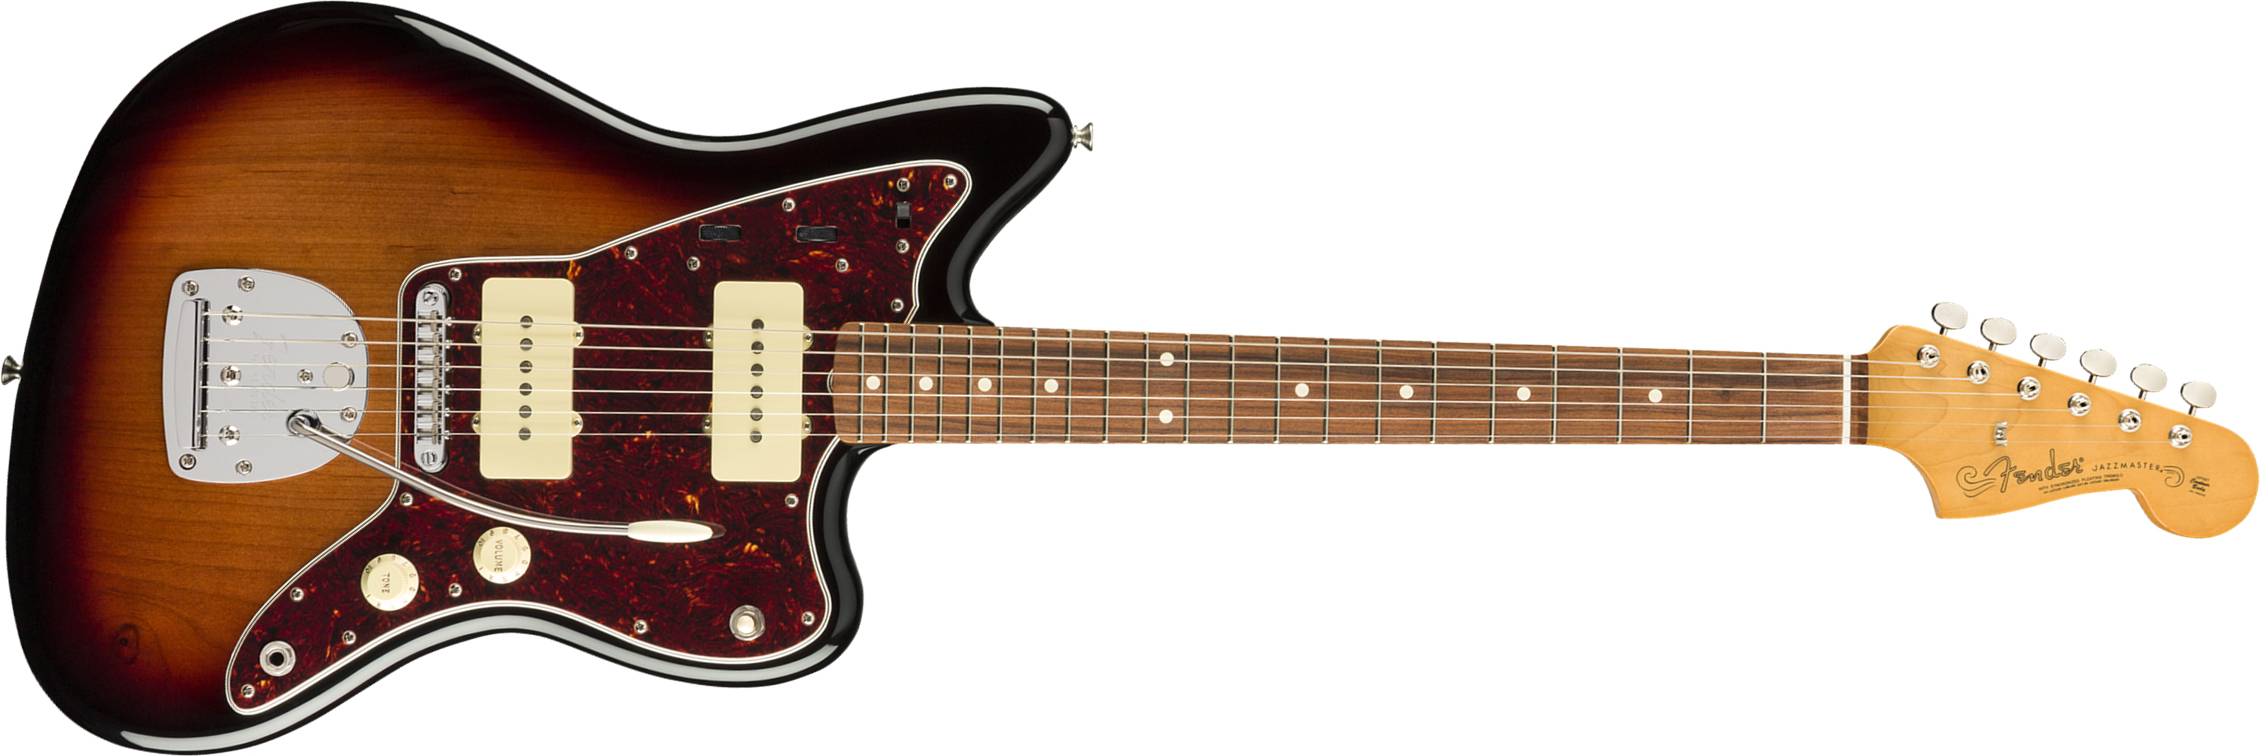 Fender Jazzmaster 60s Vintera Modified Mex Pf - 3-color Sunburst - Retro rock electric guitar - Main picture